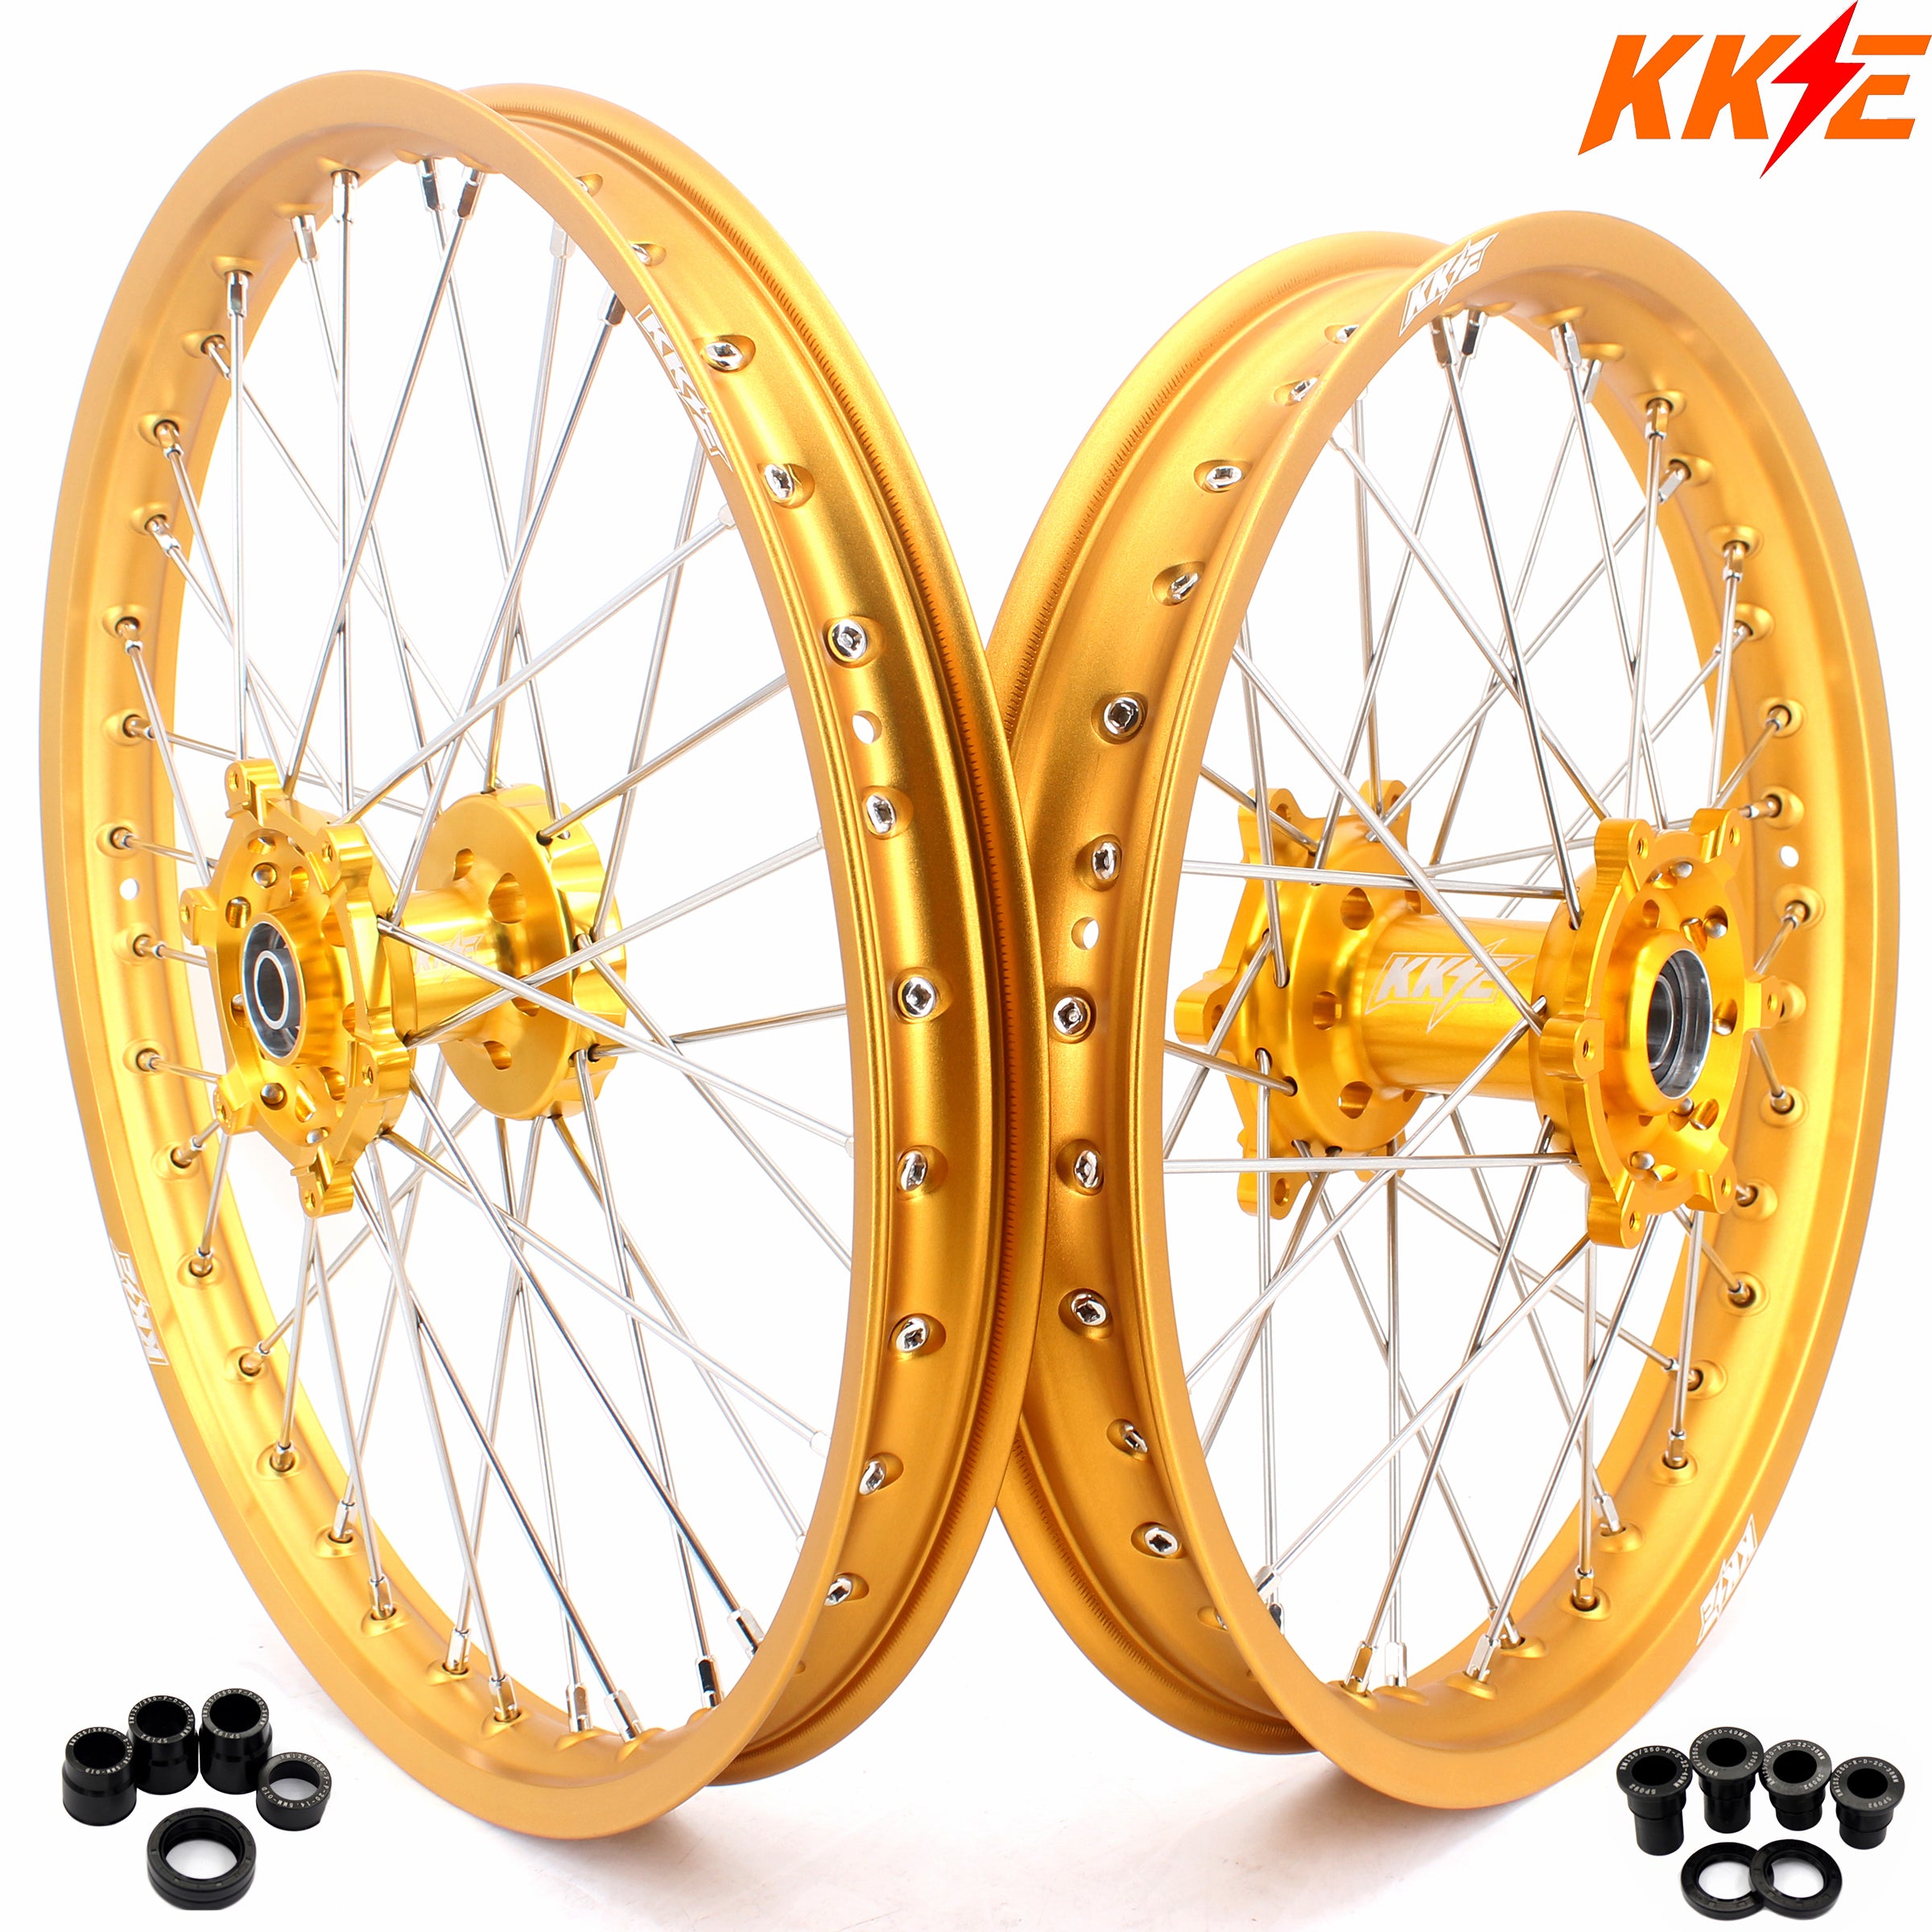 Mx&Enduro Wheels For RM Series – KKE Racing